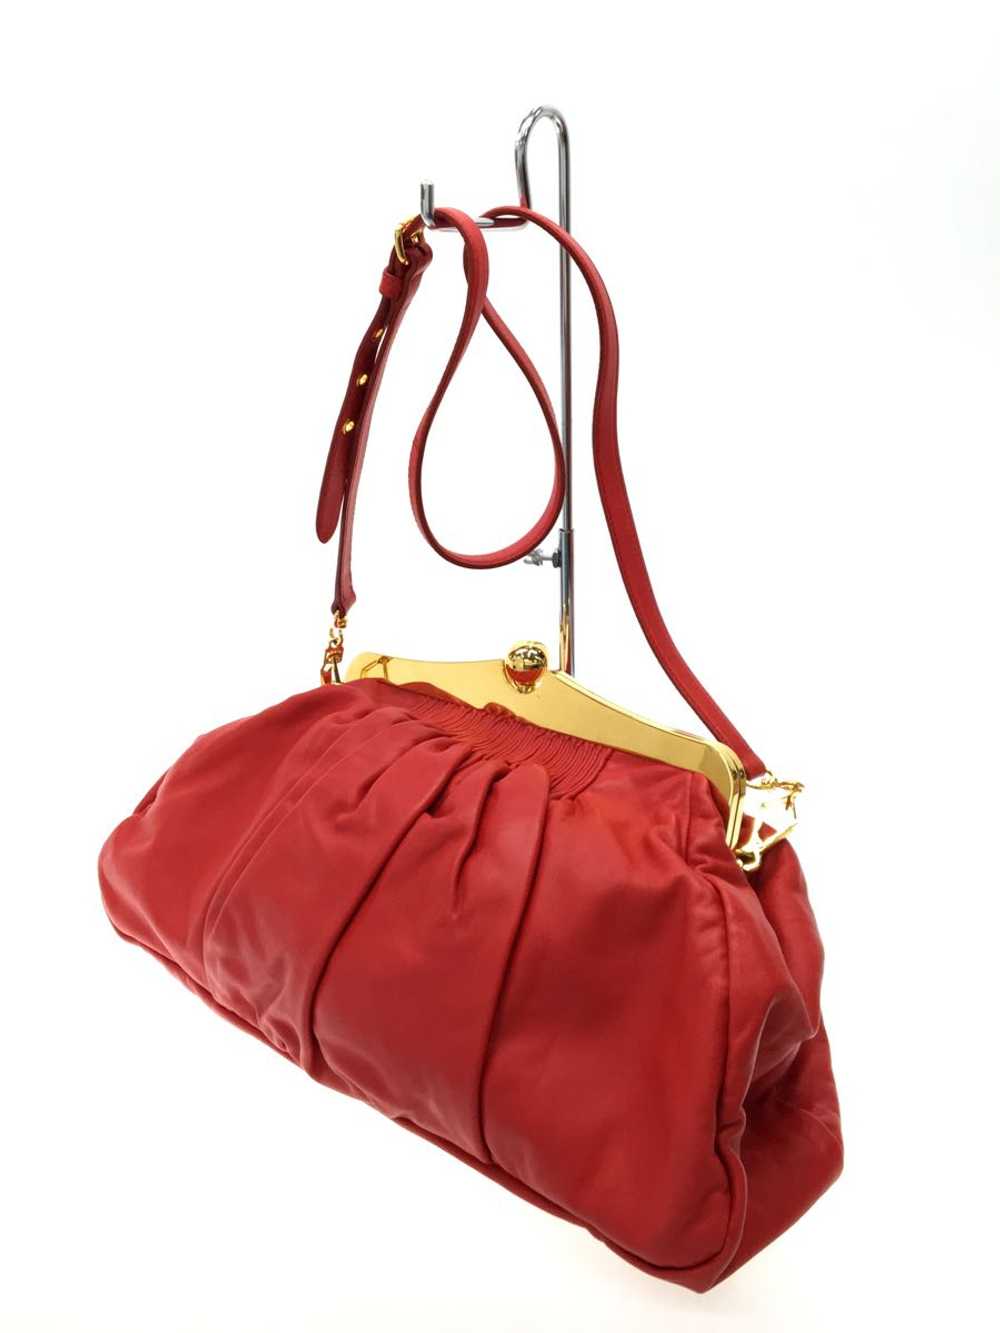 MIUMIU Purse/2Way Shoulder Bag/Leather/Red Bag - image 2